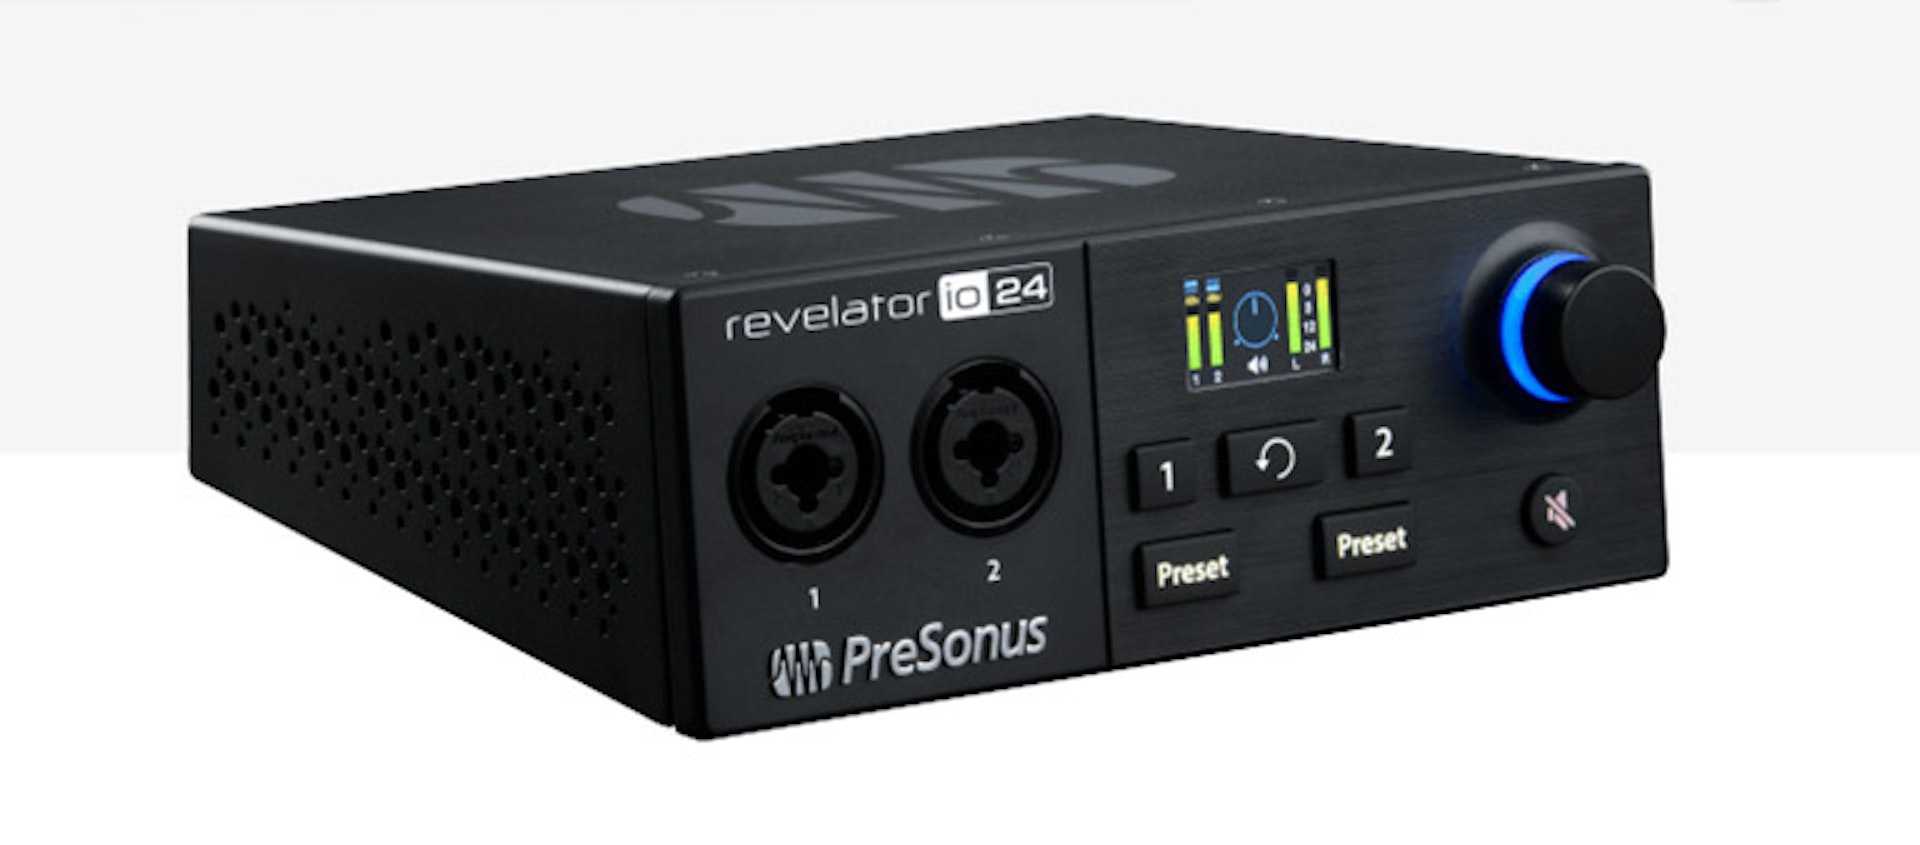 The PreSonus Revelator io24 may be a suitable alternative to the RØDECaster Pro 2.